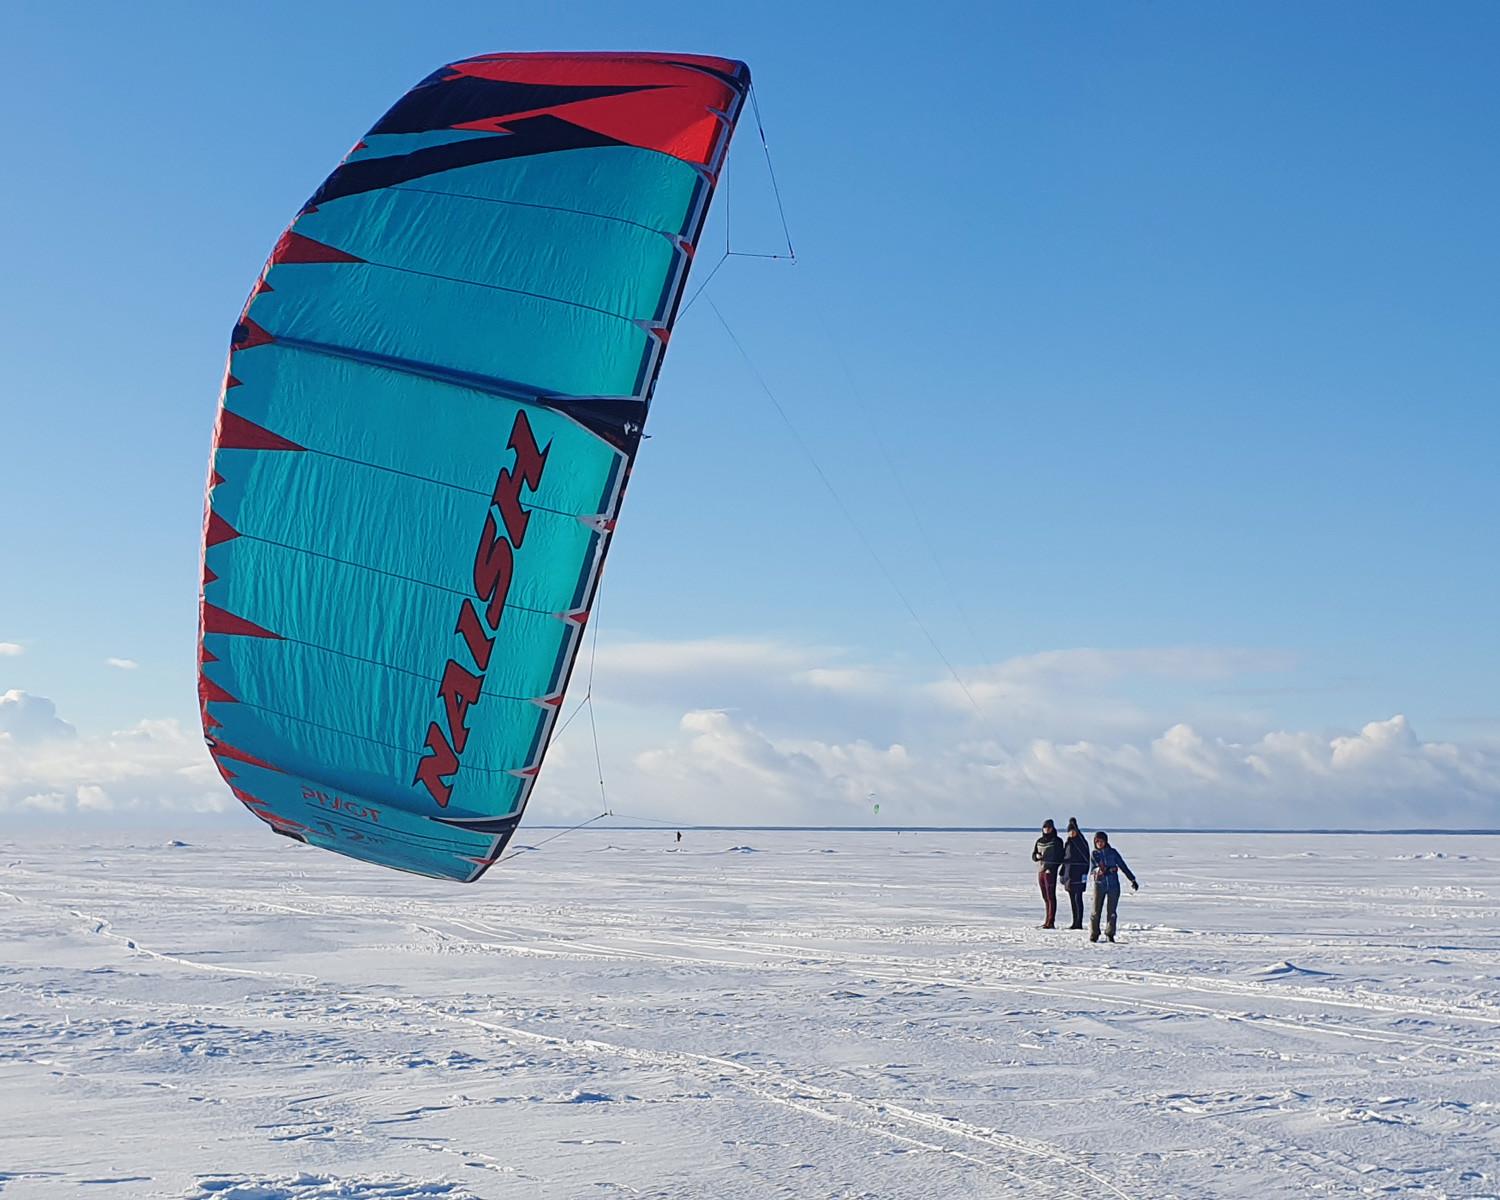 Pärnu Surf Centerin lumisurffaus